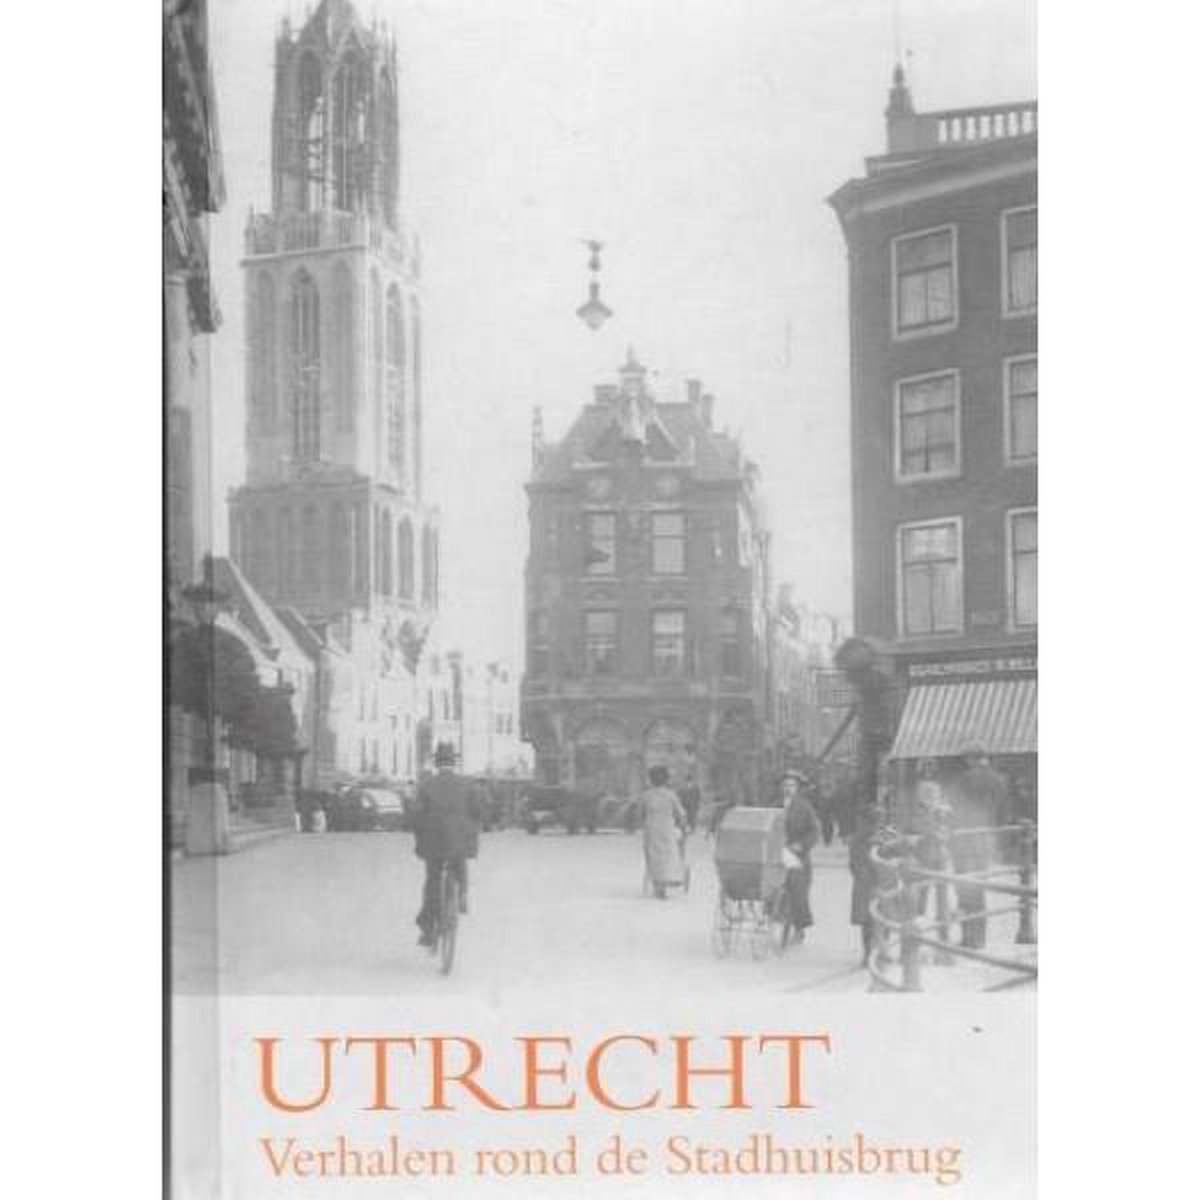 Utrecht, verhalen rond de Stadhuisbrug